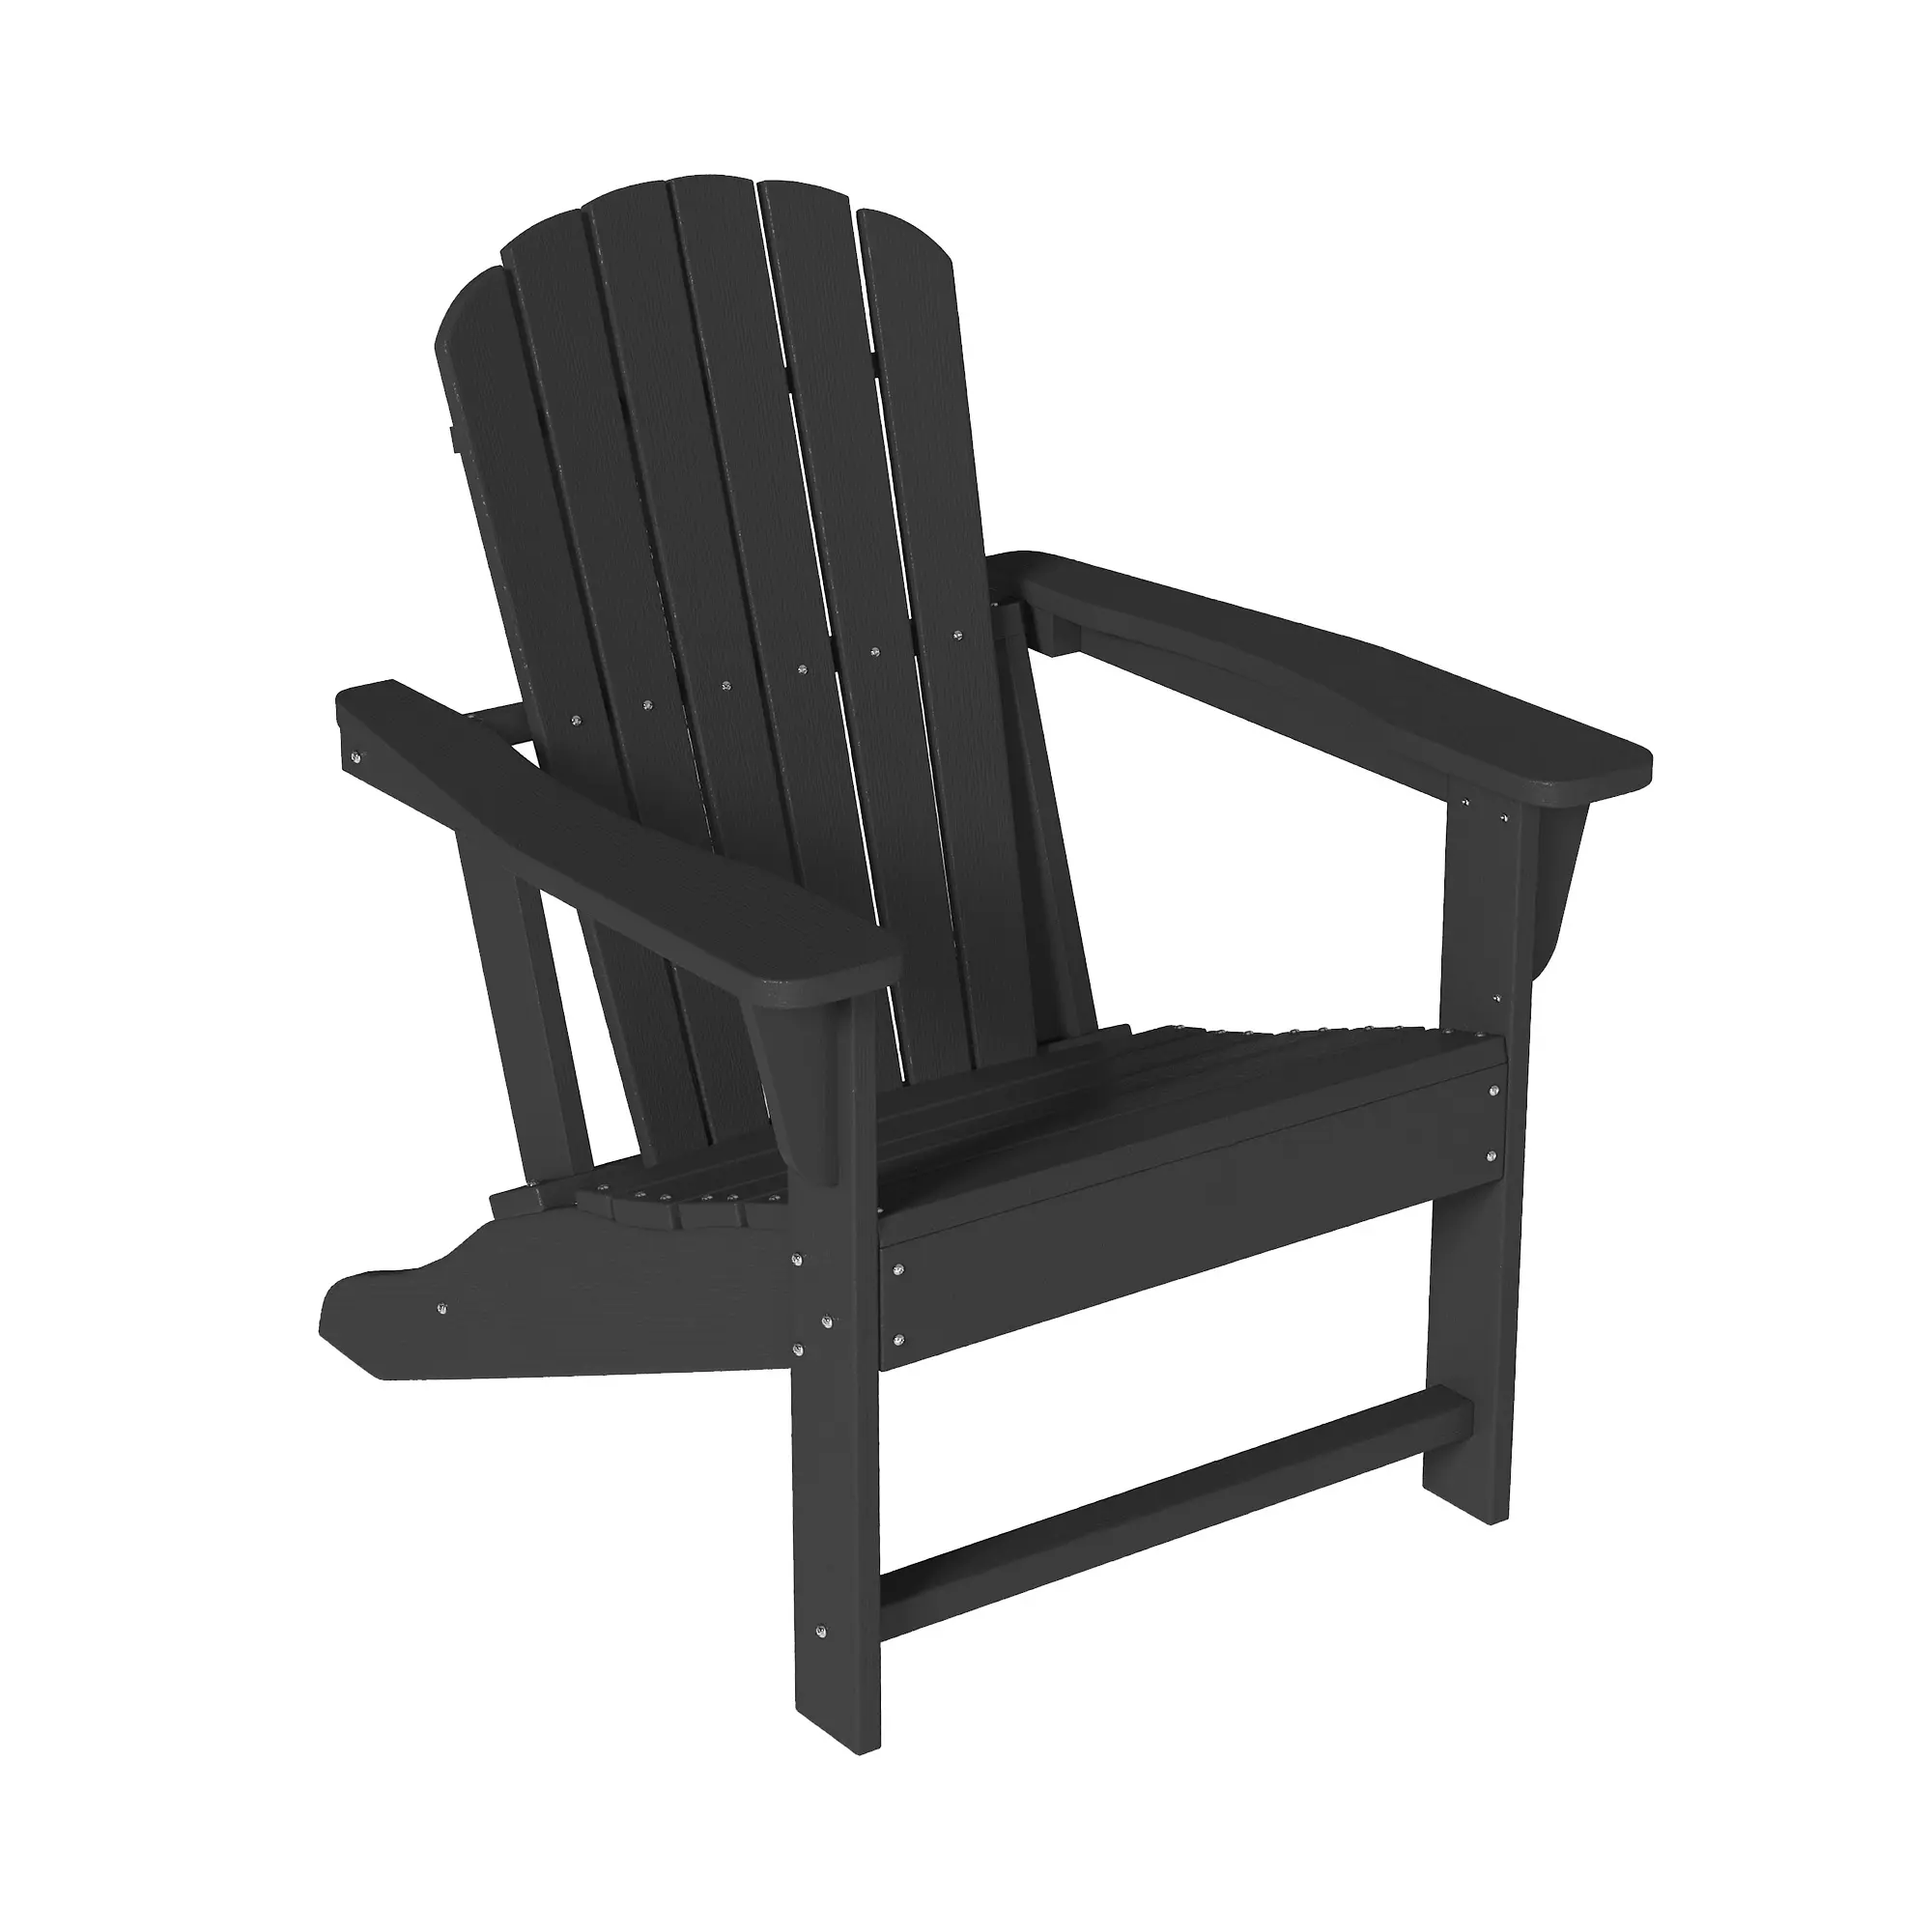 Polywood Classic Folding and Reclining Adirondack Chair